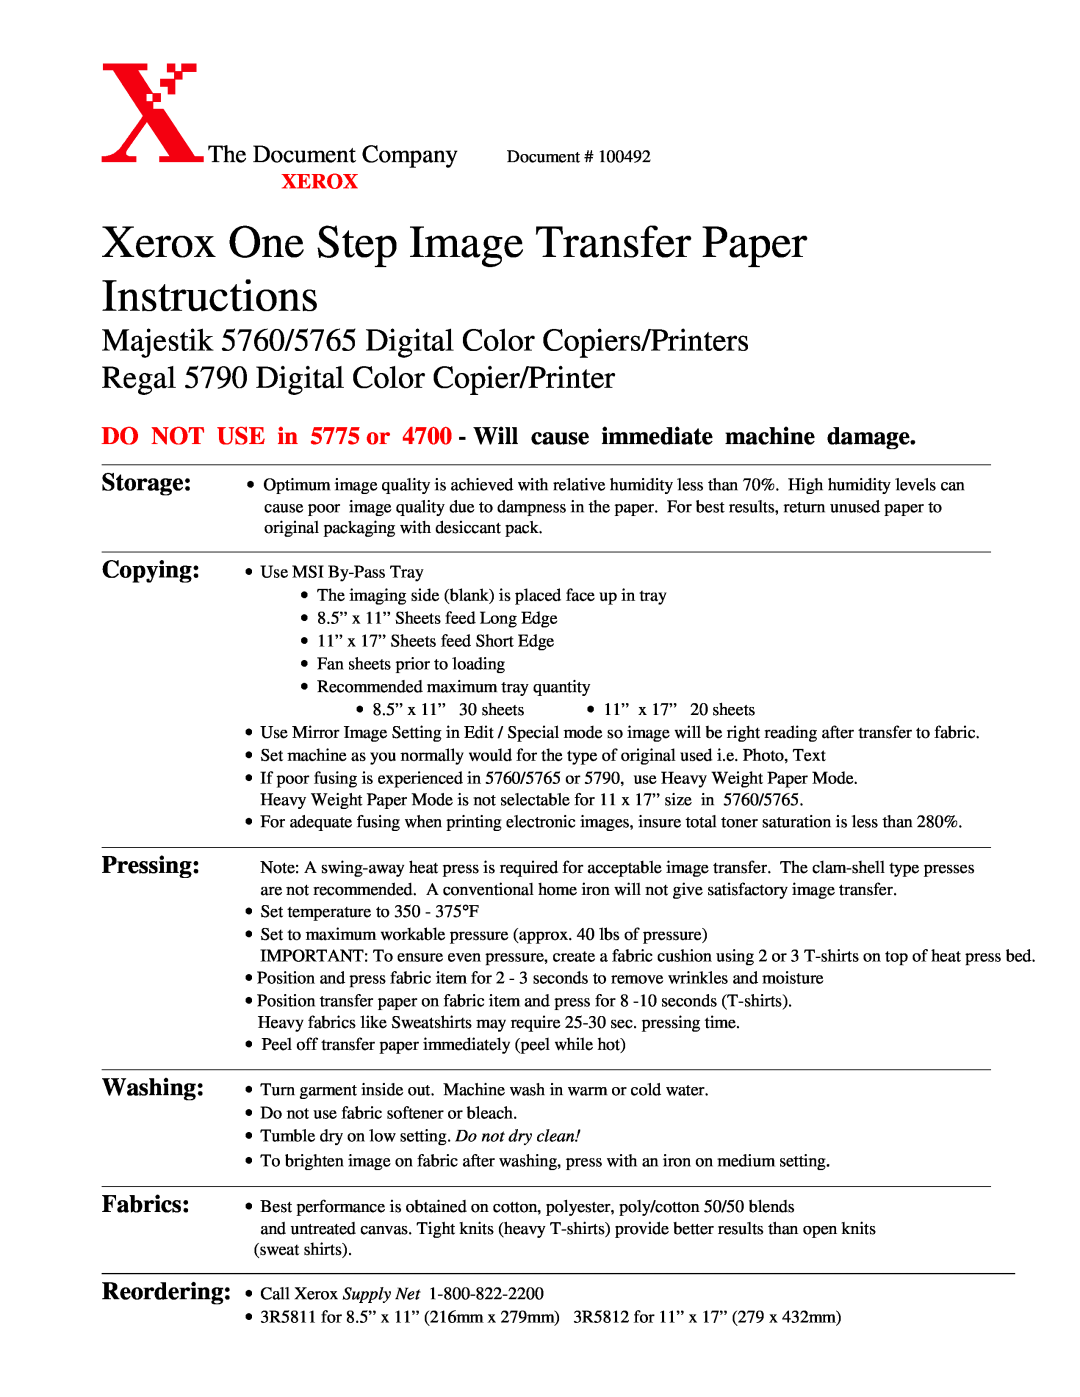 Xerox manual Xerox WorkCentre, Information Assurance Disclosure Paper Version, 5735/5740/5745/5755/5765/5775/5790 